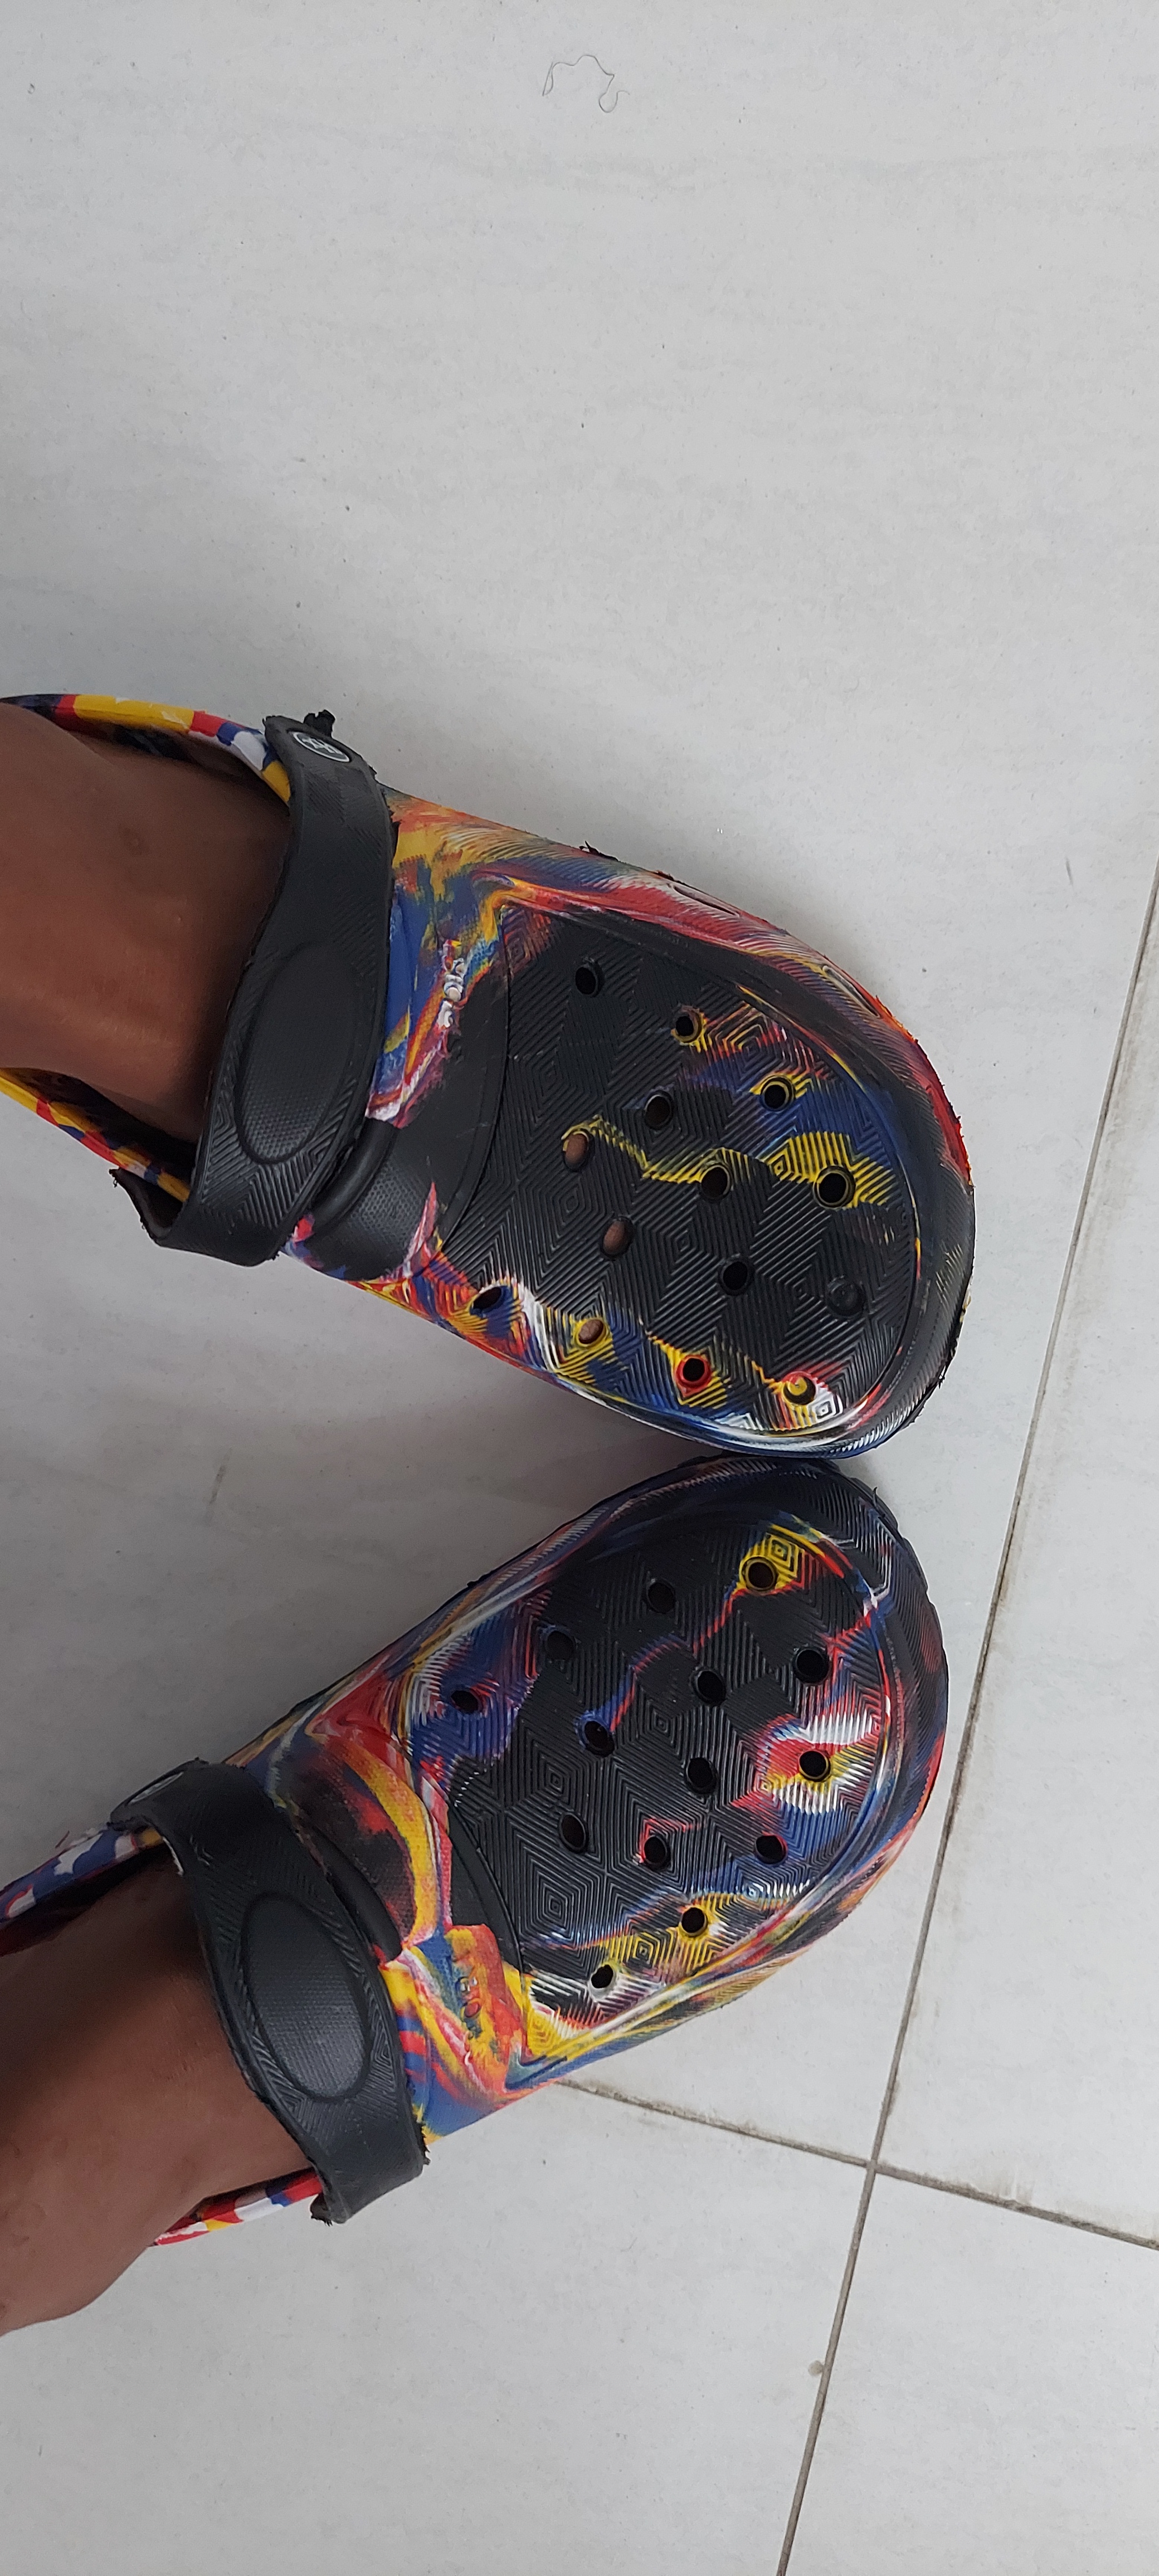 A feet in multi coloured crocs